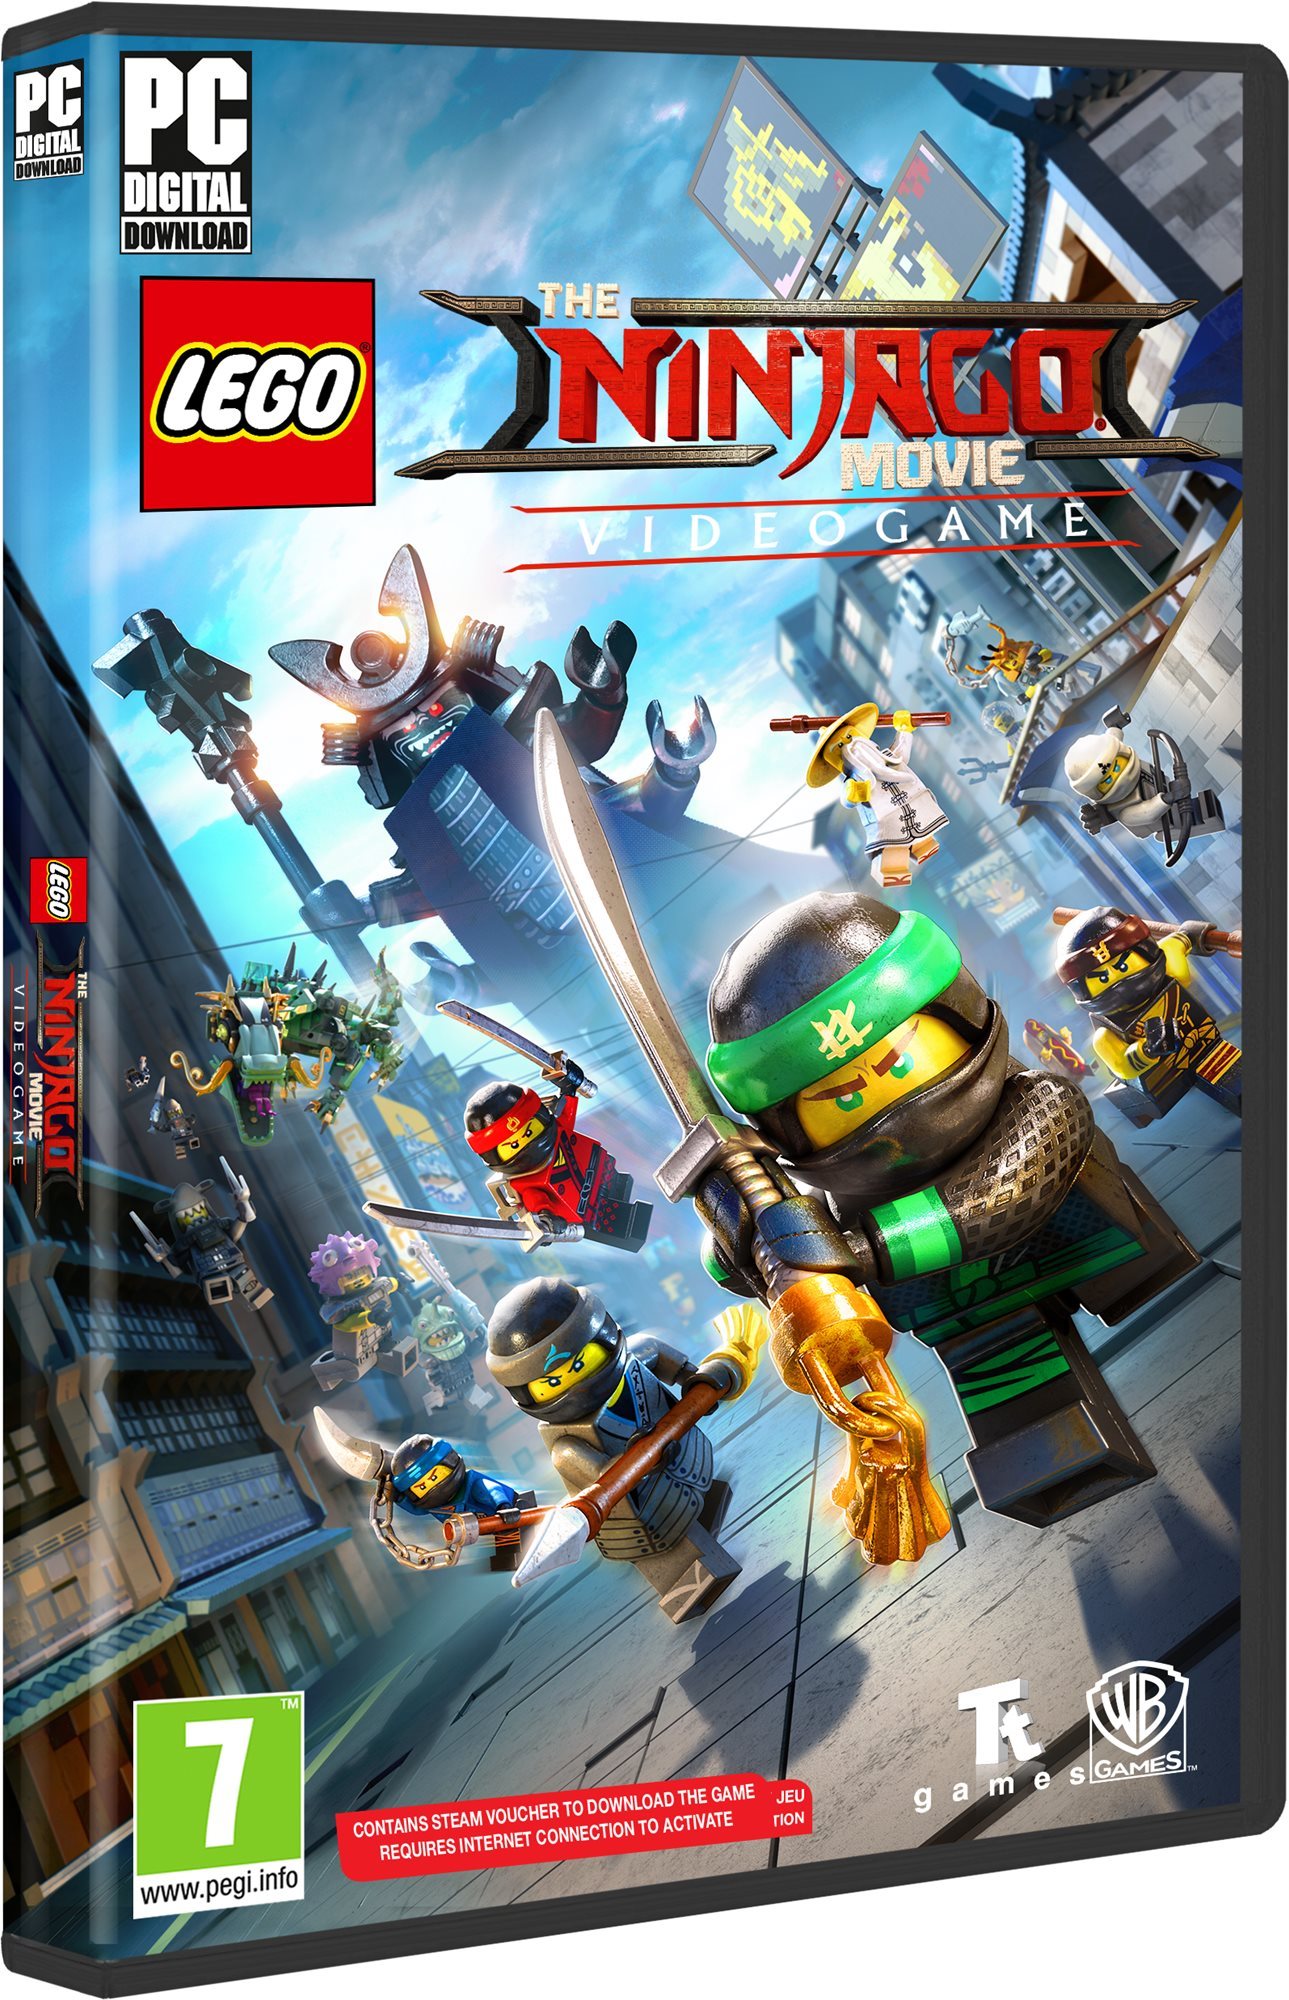 LEGO Ninjago Movie Videogame - PC DIGITAL